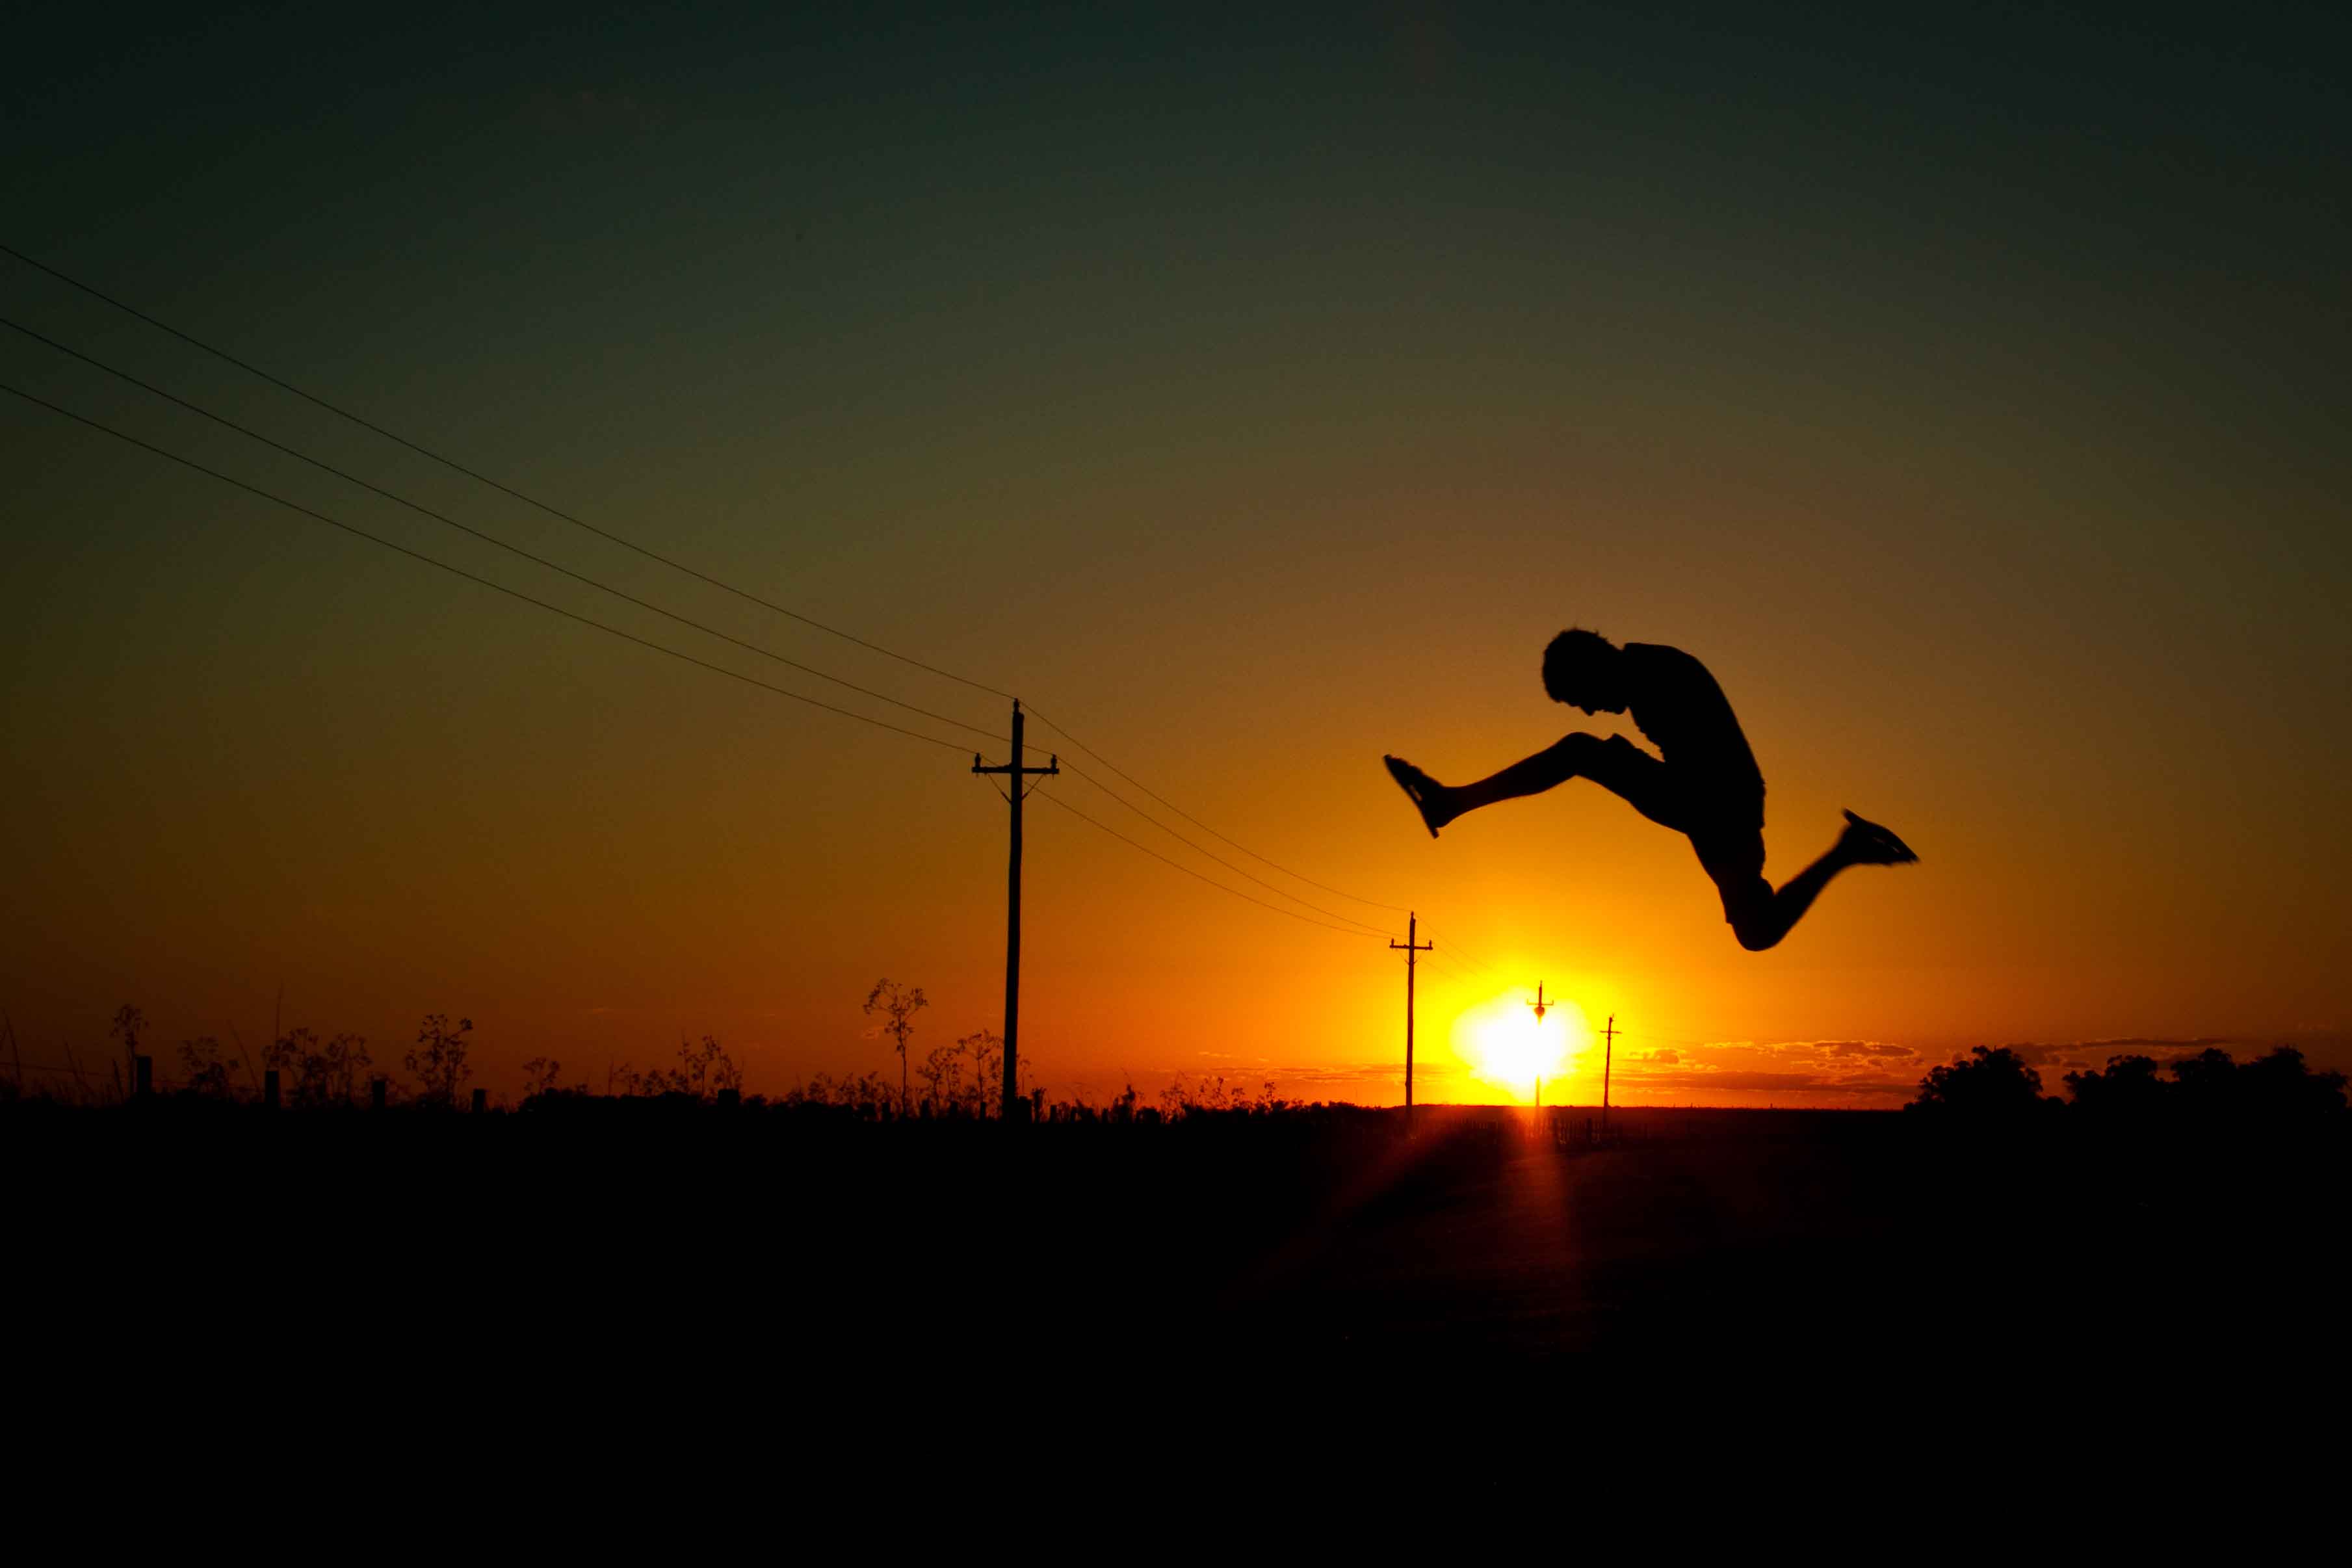 Leaping_over_the_sun_-_Flickr_-_aramolara